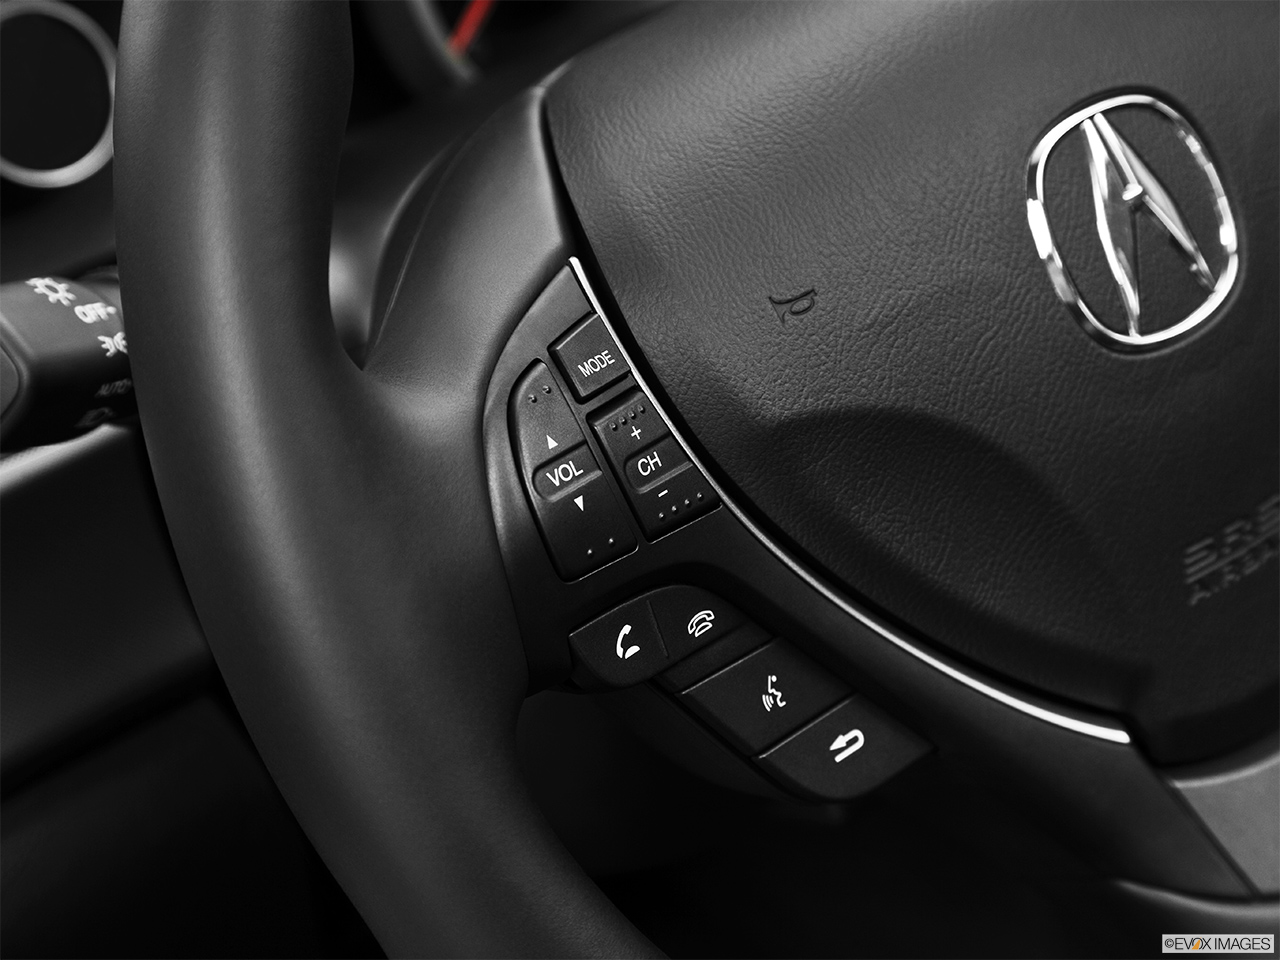 2013 Acura TL SH-AWD Steering Wheel Controls (Left Side) 